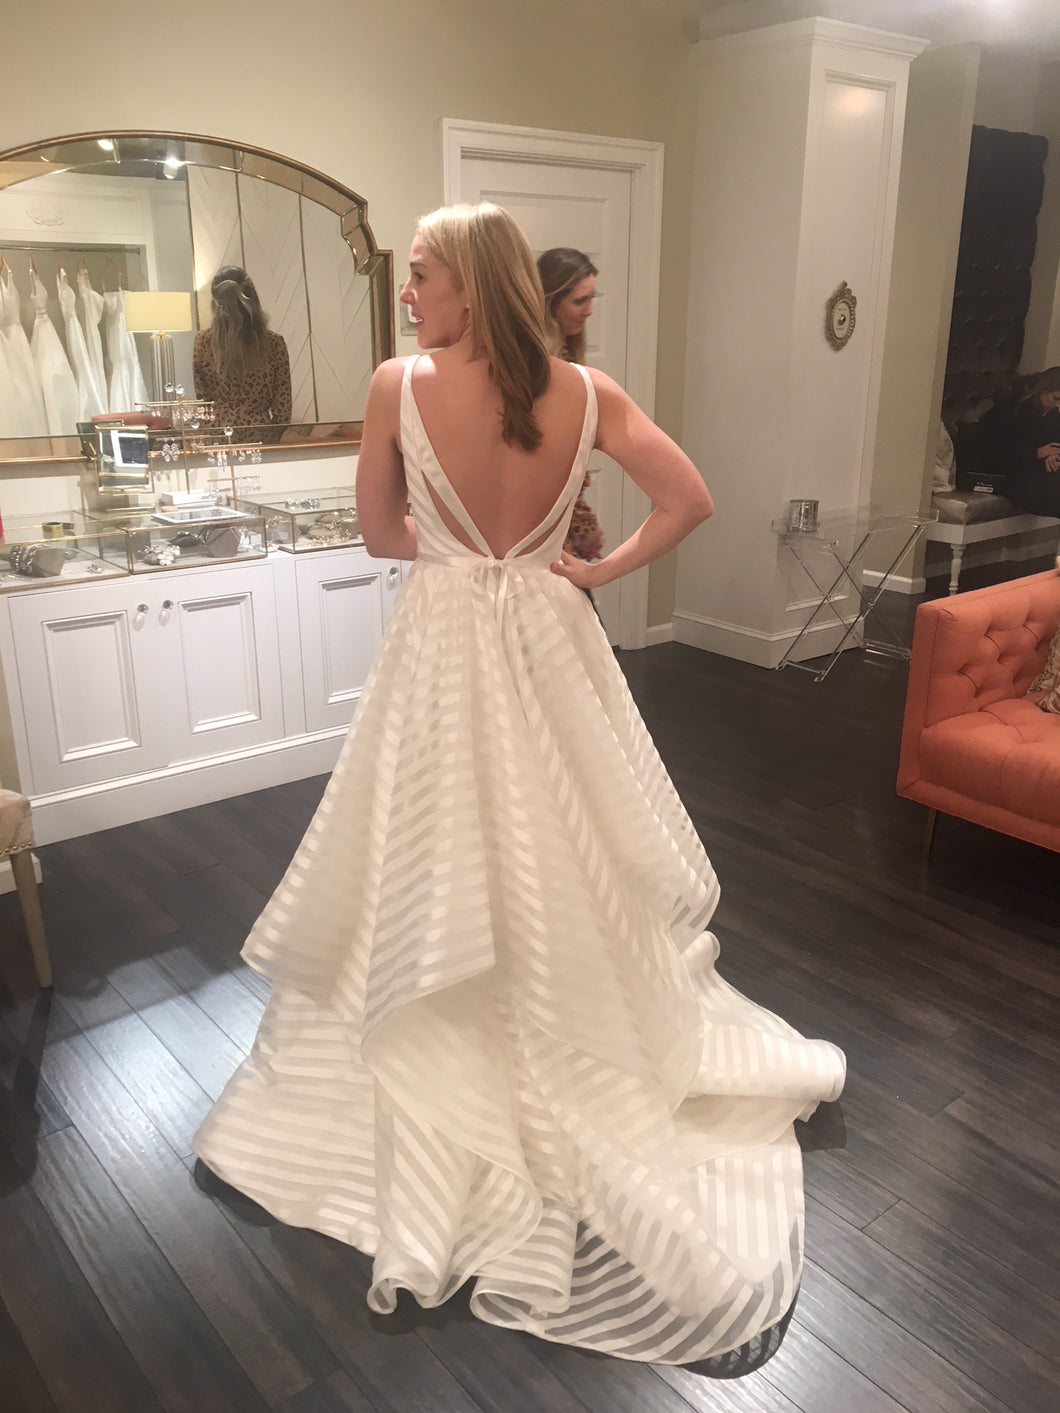 Hayley Paige 'Decklyn' size 6 used wedding dress back view on bride